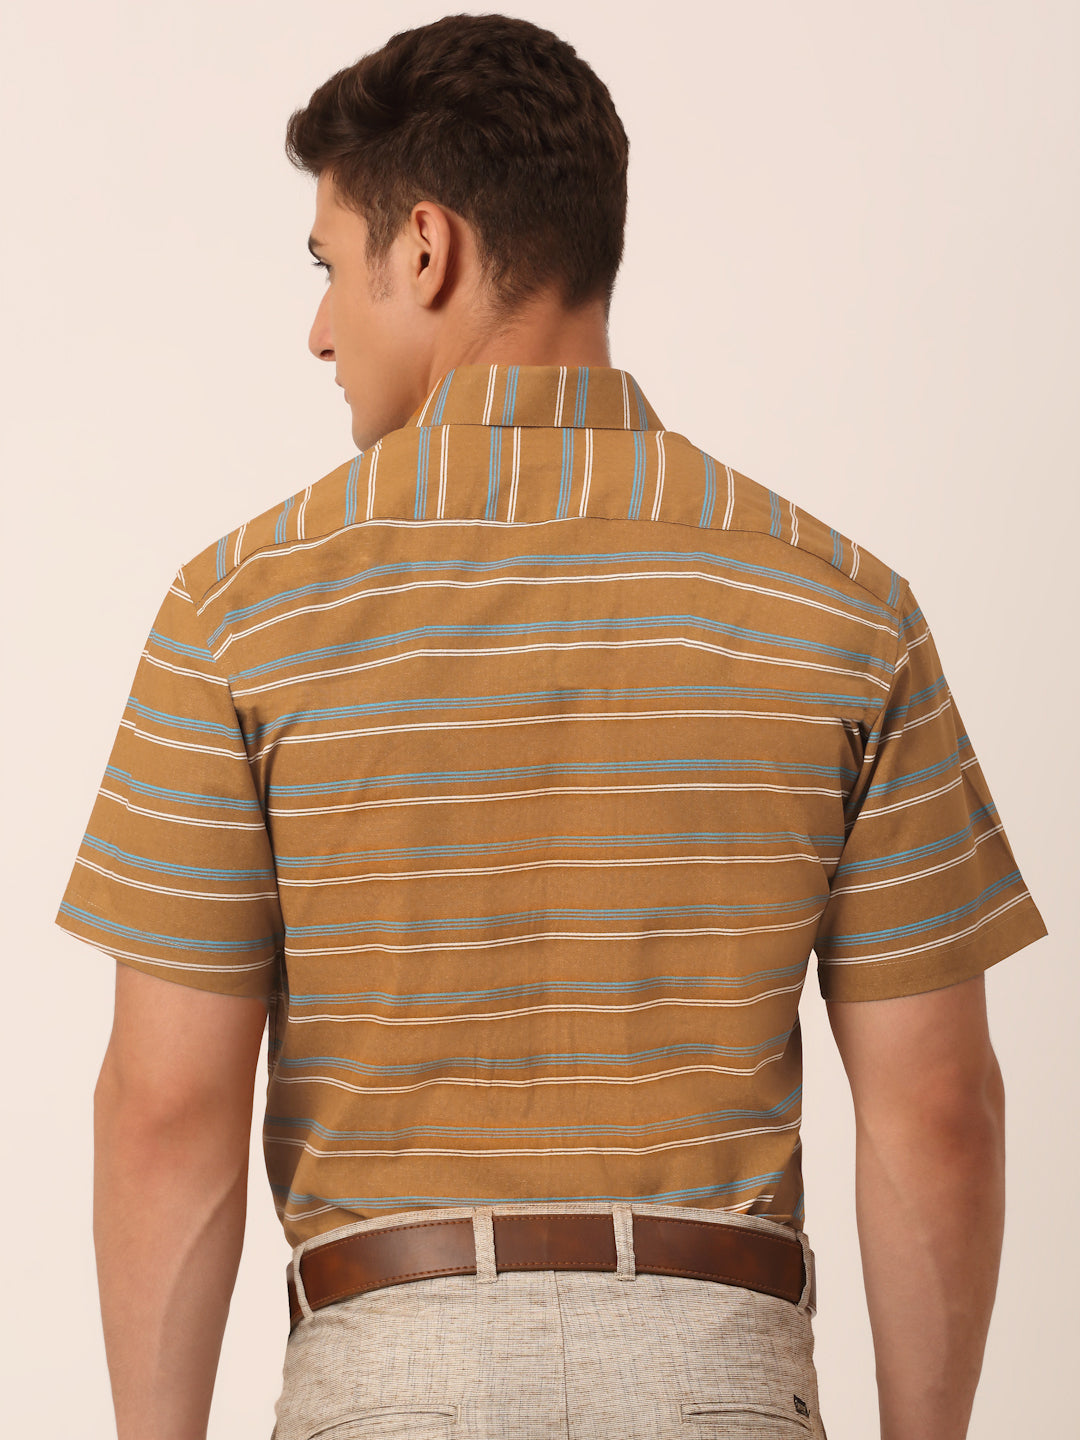 Jainish Men's Cotton Striped Half Sleeve Formal Shirts